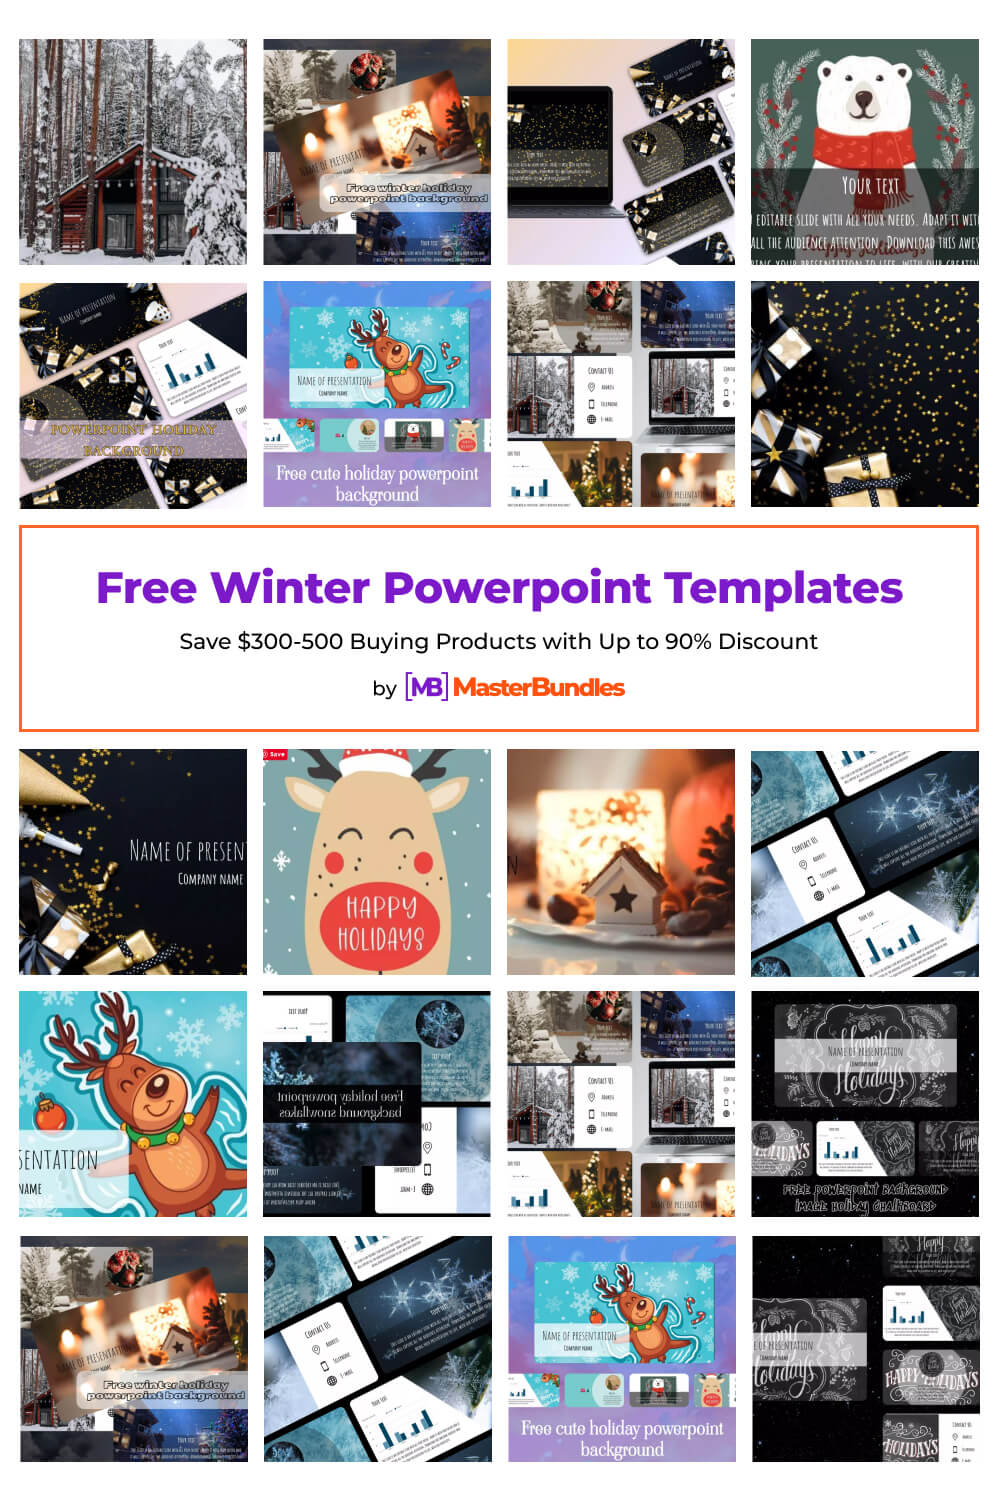 free winter powerpoint templates pinterest image.